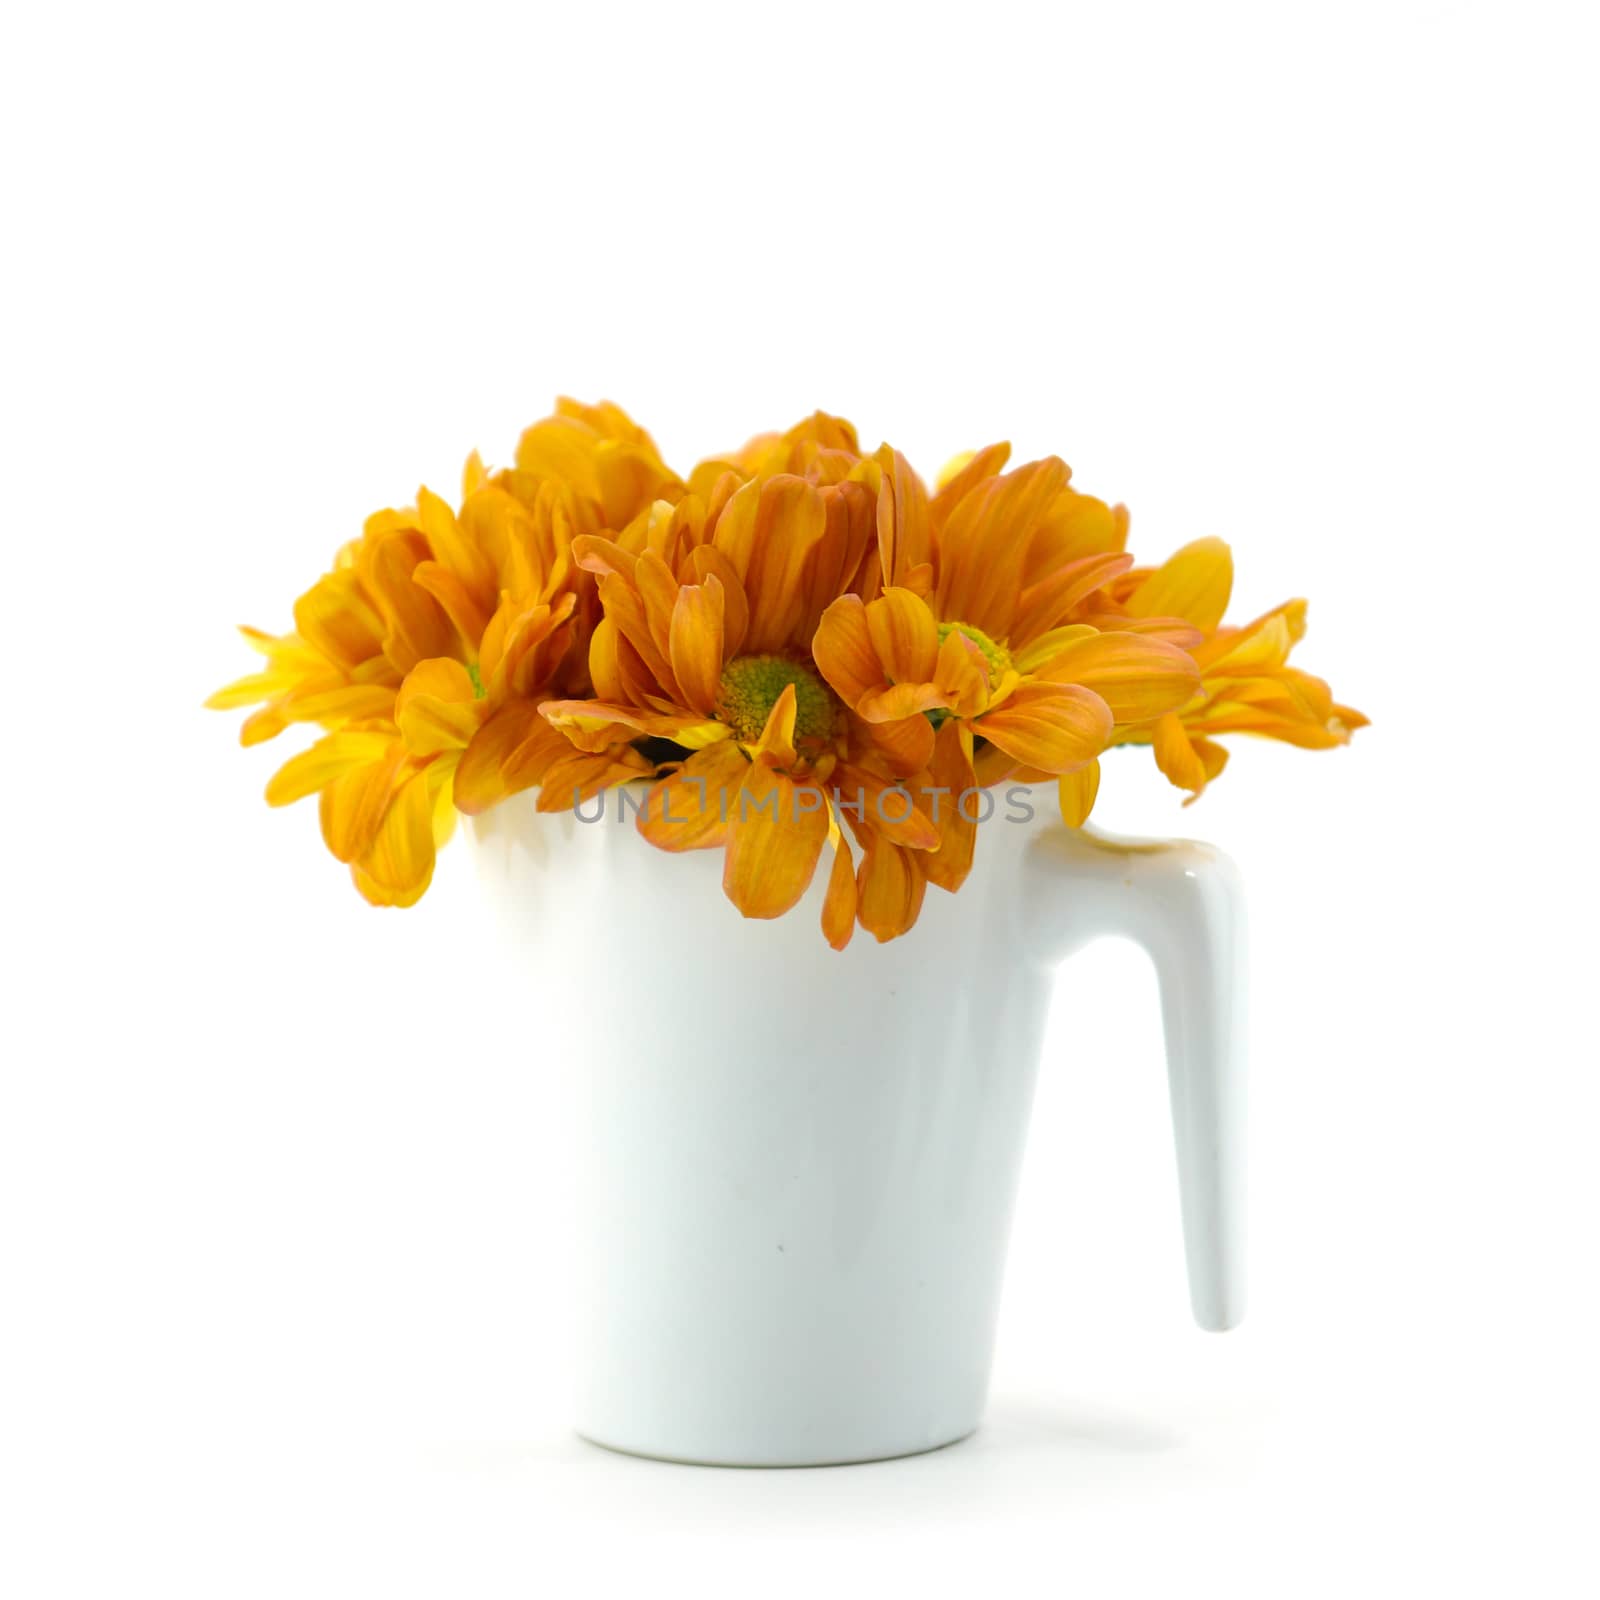 orange chrysanthemum on white background by Noppharat_th